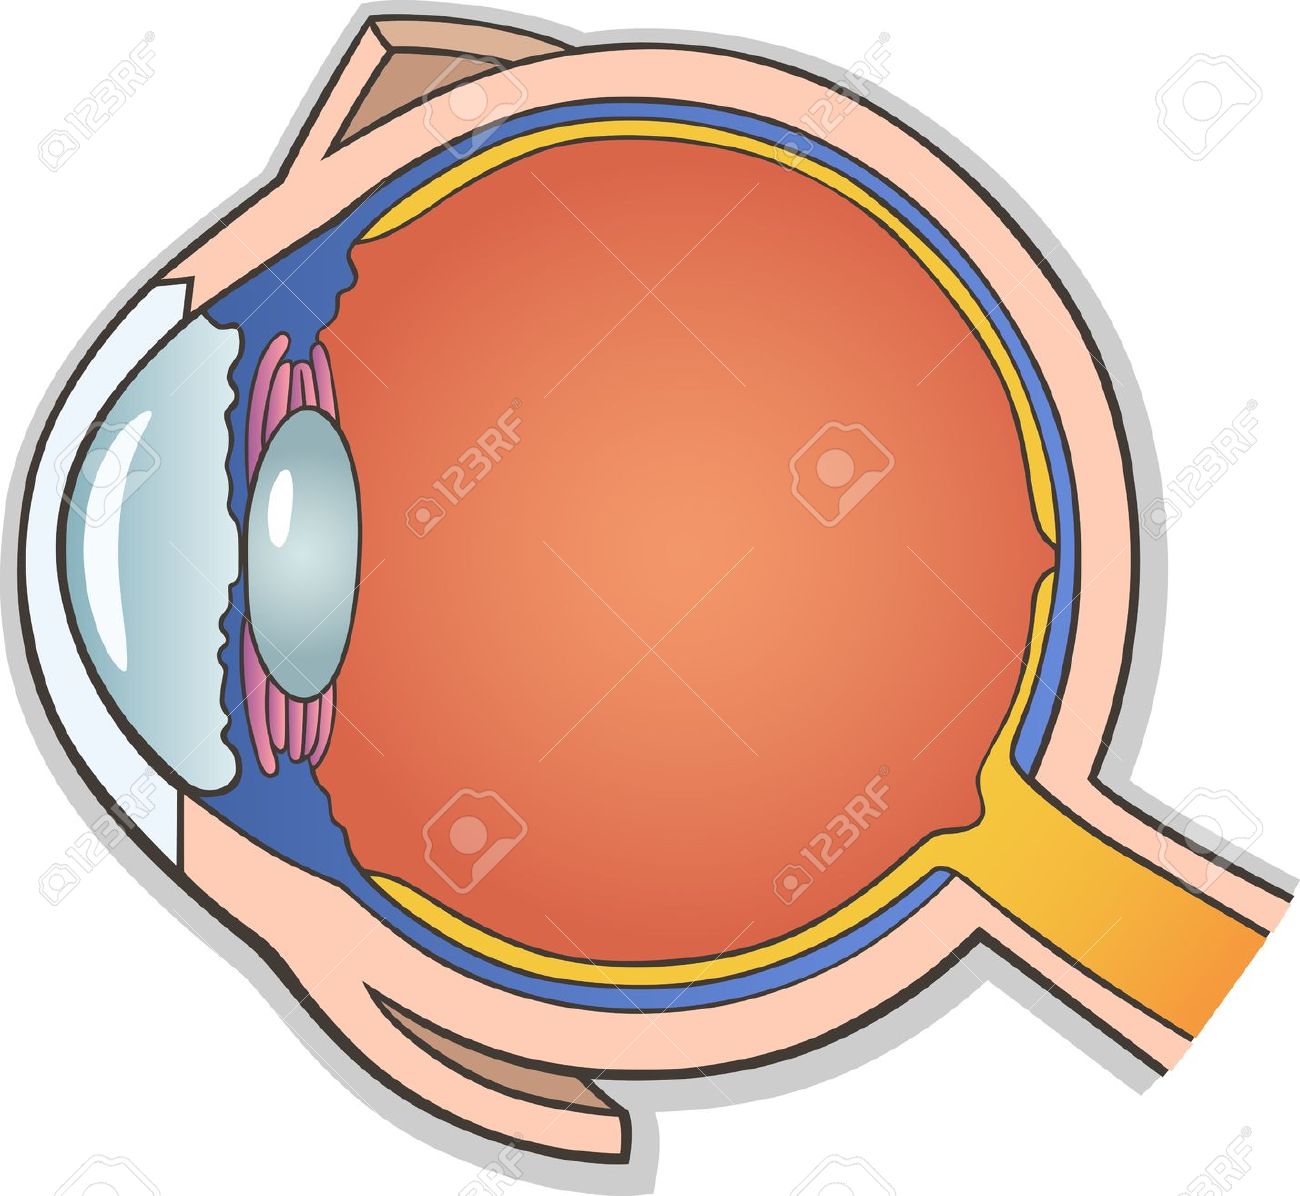 Medical Vector Illustration Of Human Eye Ball Cross Section.